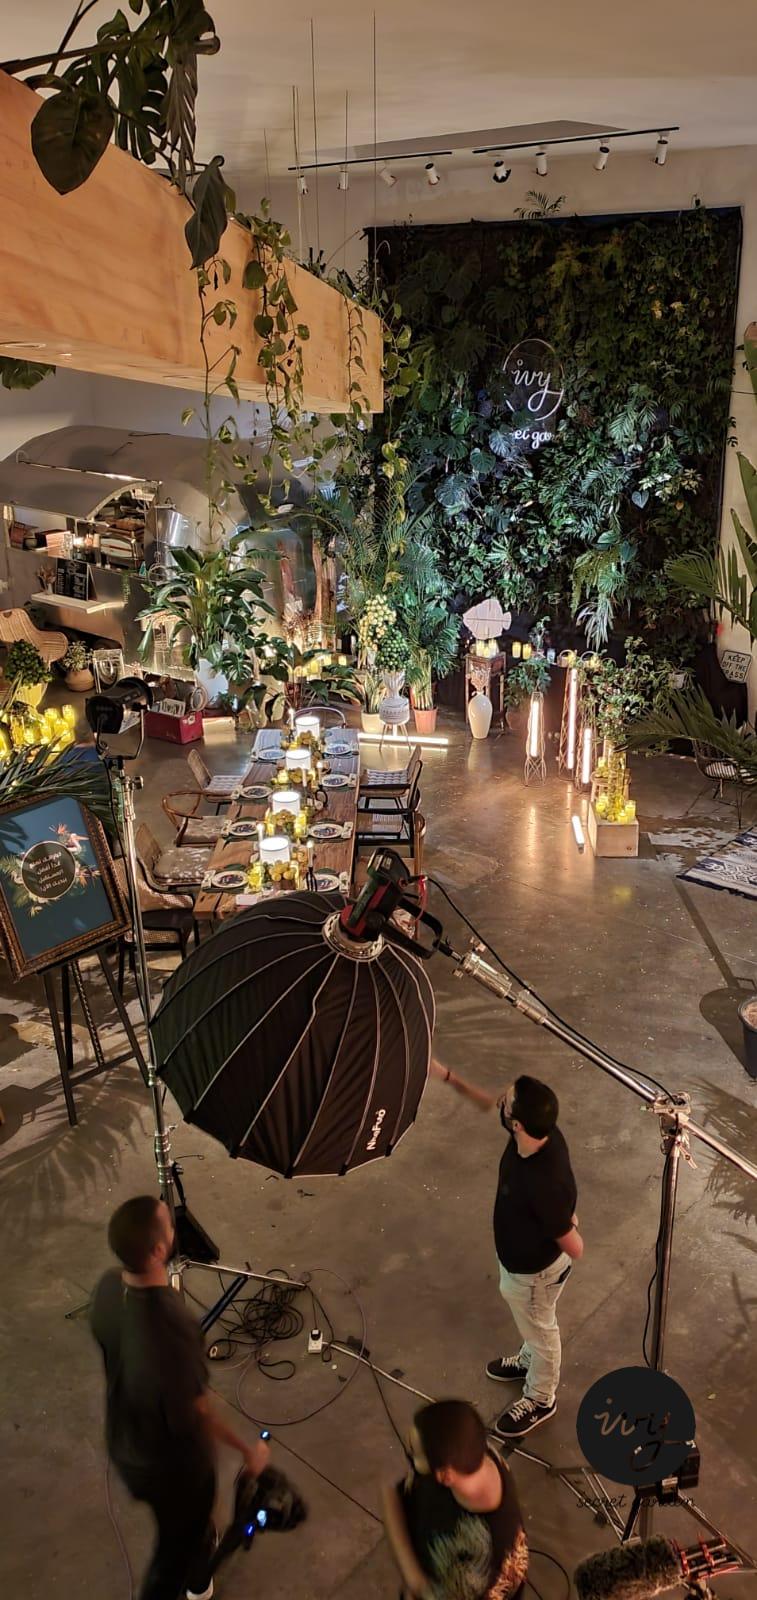 MBC Arabia filming location rental in Ivy secret garden